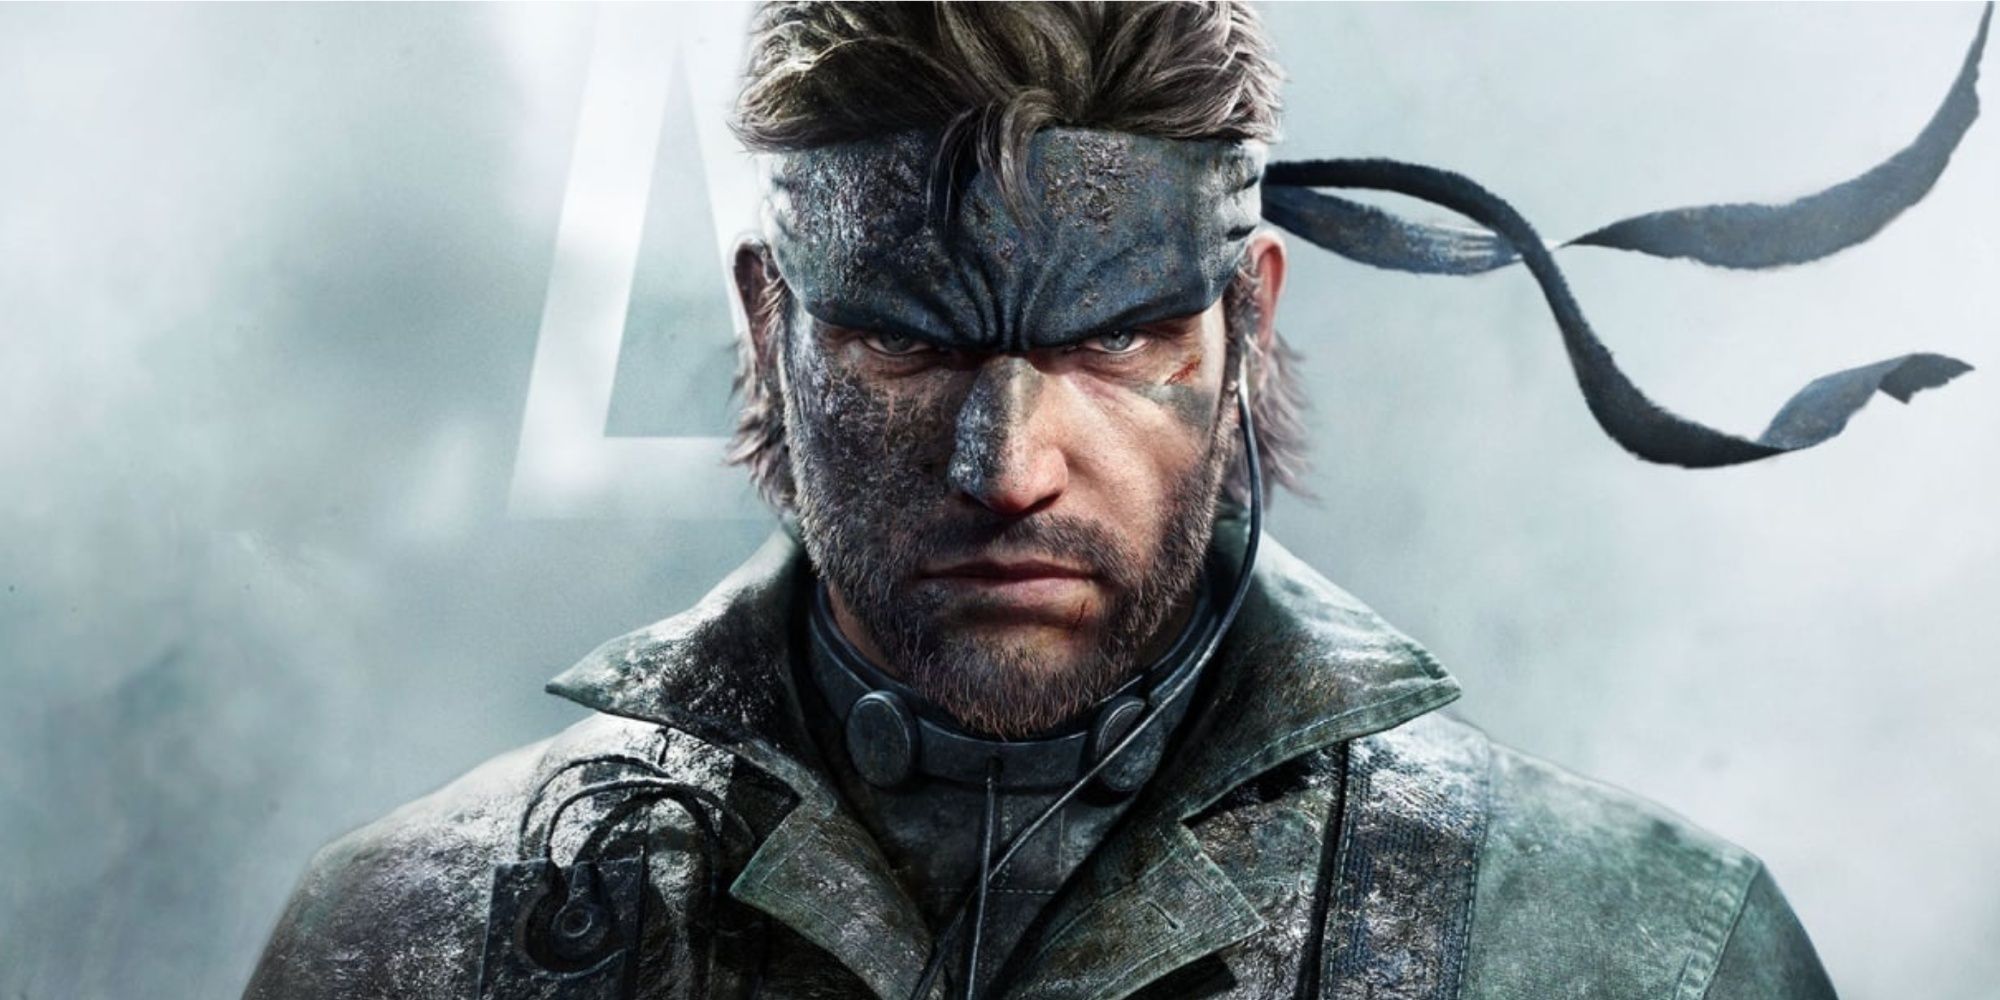 Big Boss/Naked Snake in Metal Gear Solid Delta Snake Eater